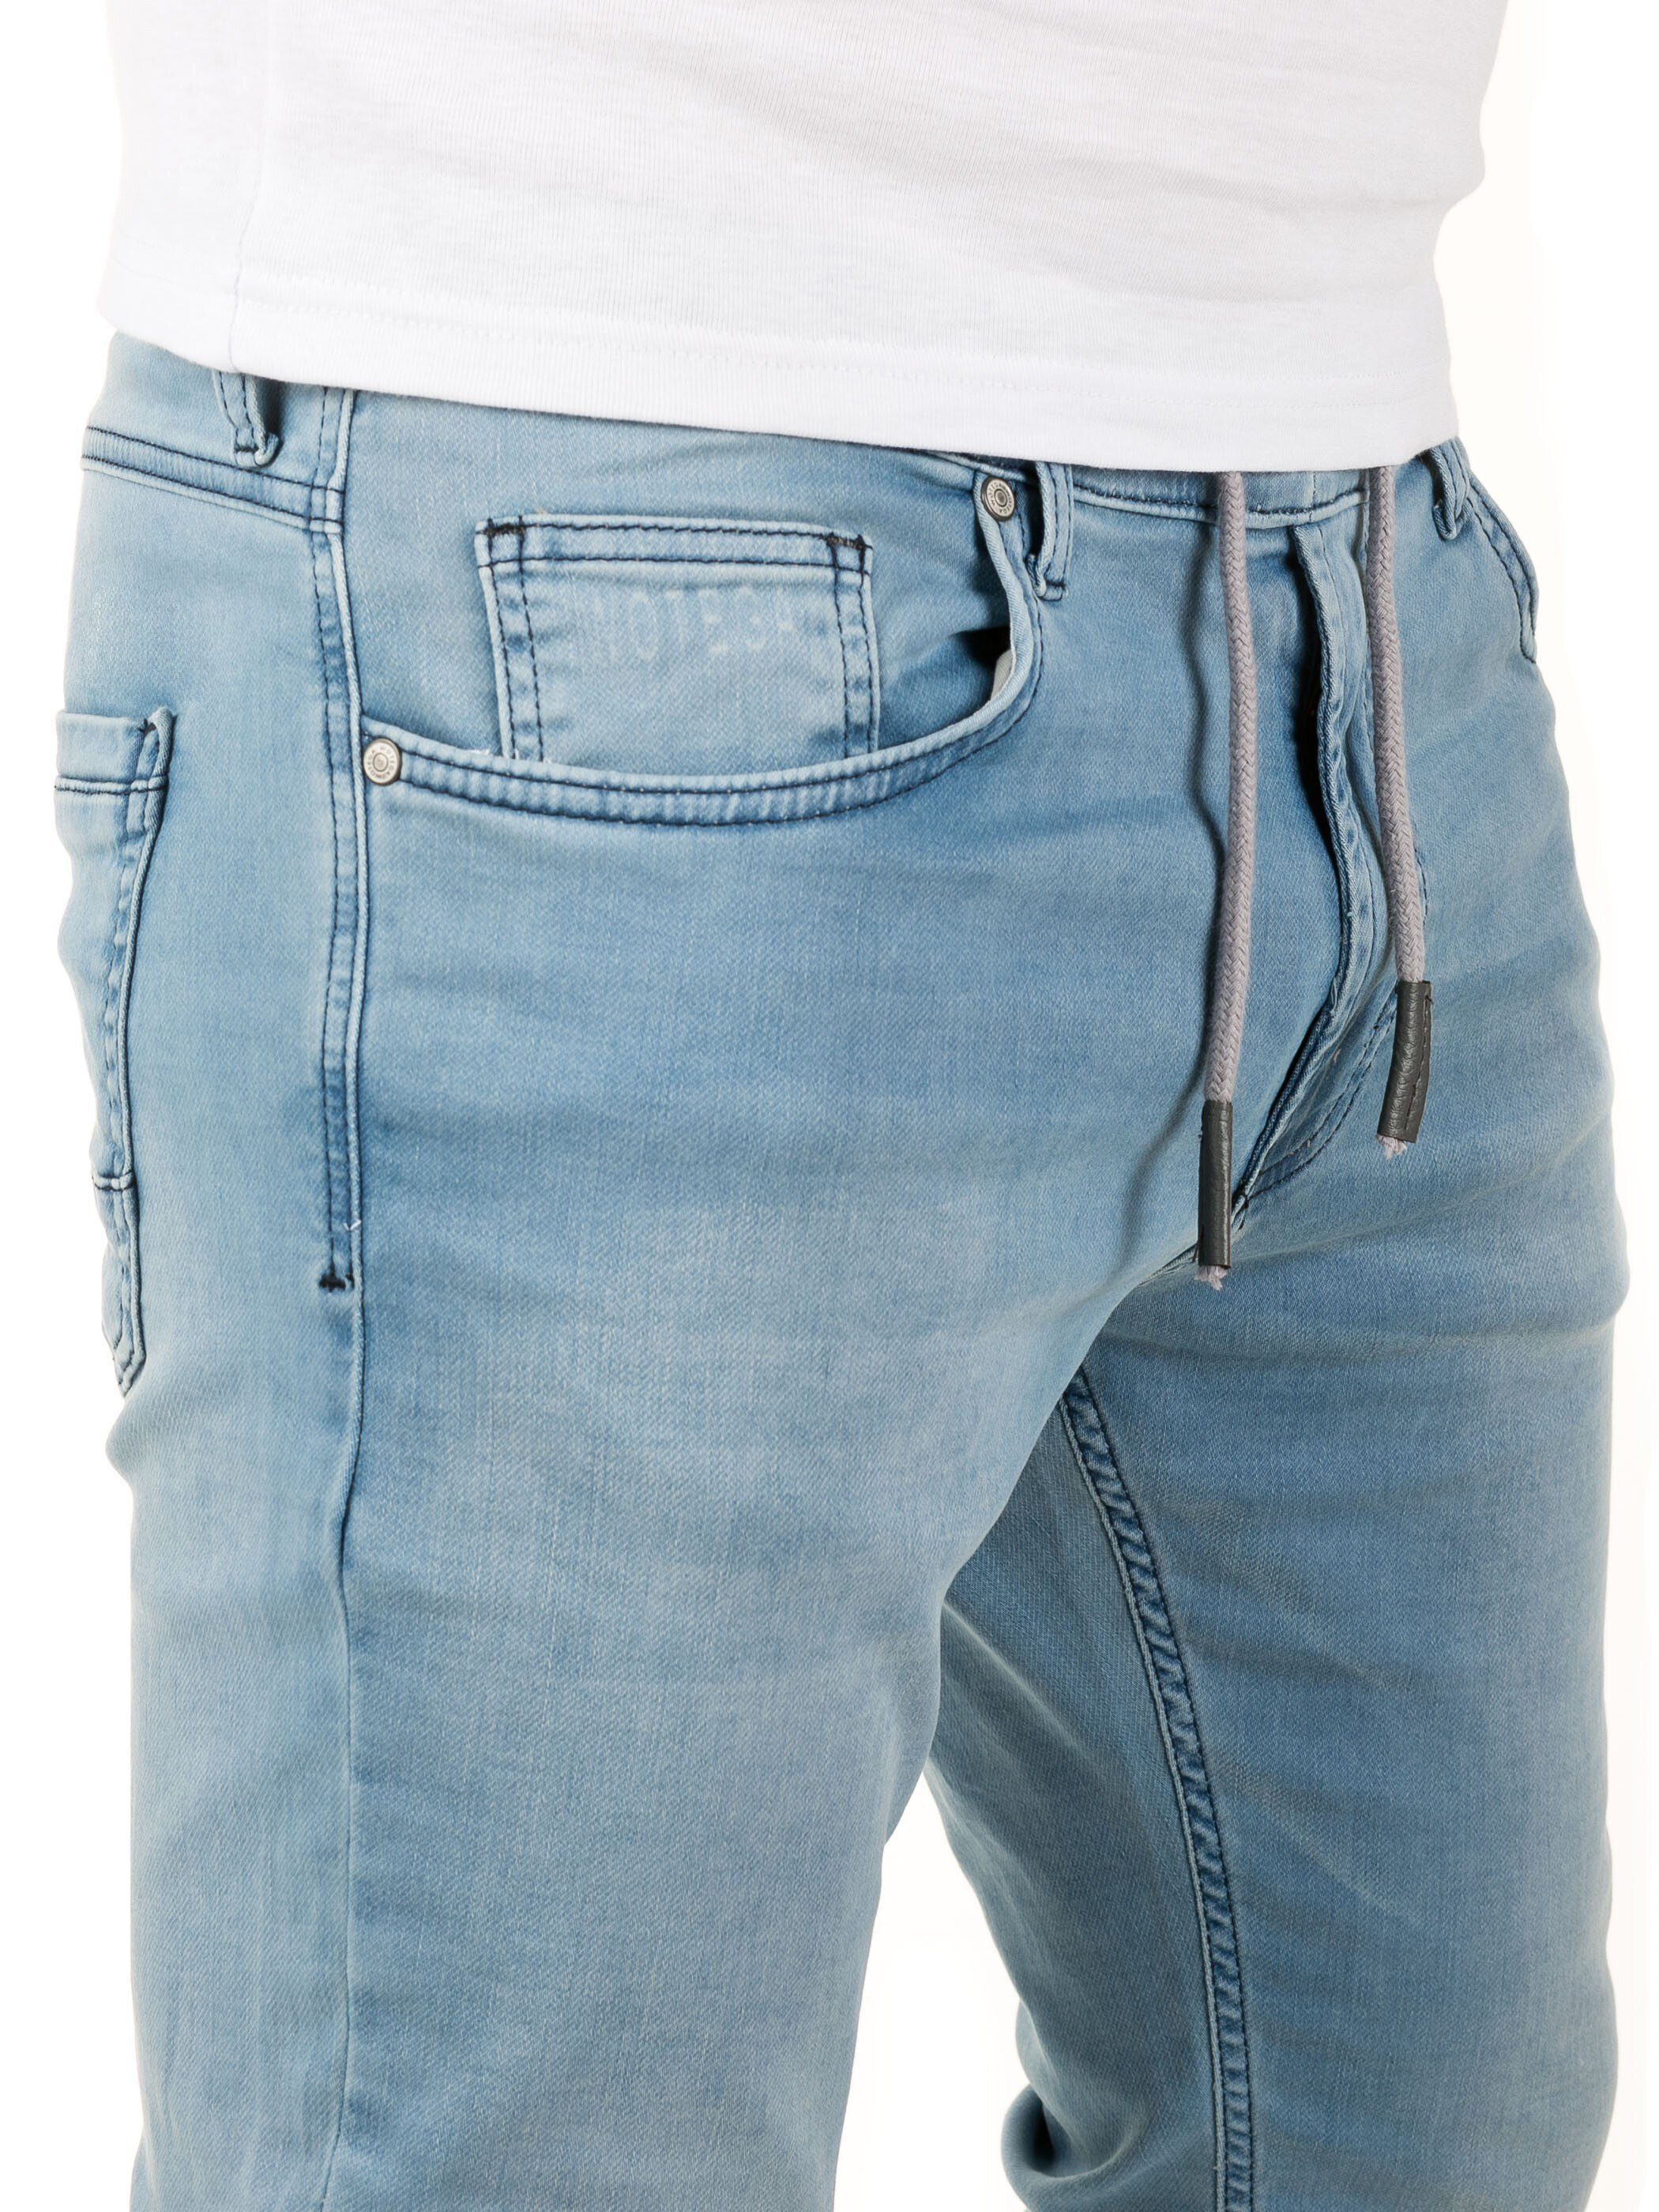 Jogginghose in Denim Sweathosen Stretch Blau in Jeans-Look Noah Herren Shadow Hose (Blue Slim-fit-Jeans Jeans 3R4020) WOTEGA Jogging